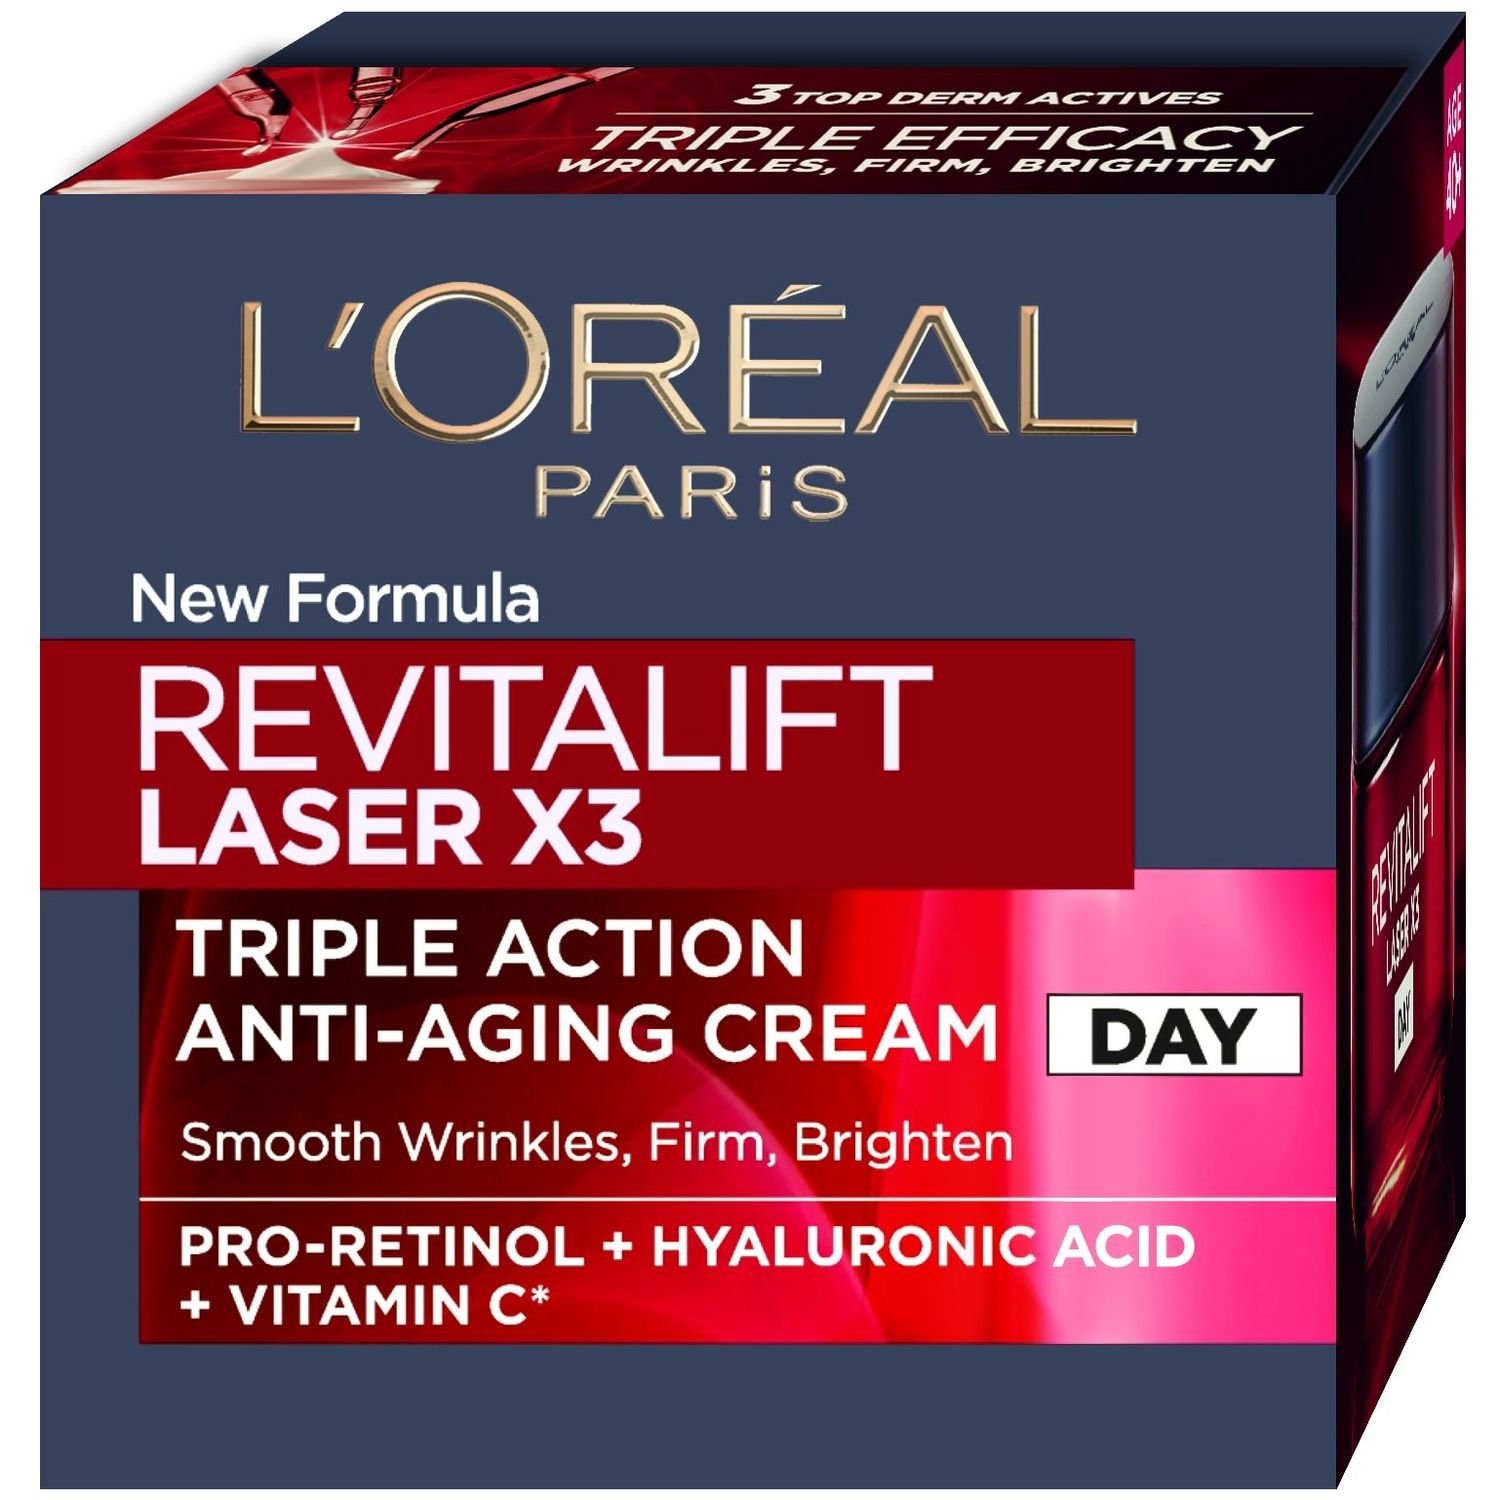 Дневной крем для лица L'Oreal Paris Revitalift Лазер Х3, регенерирующий глубокий уход, 50 мл (A6671200) - фото 4